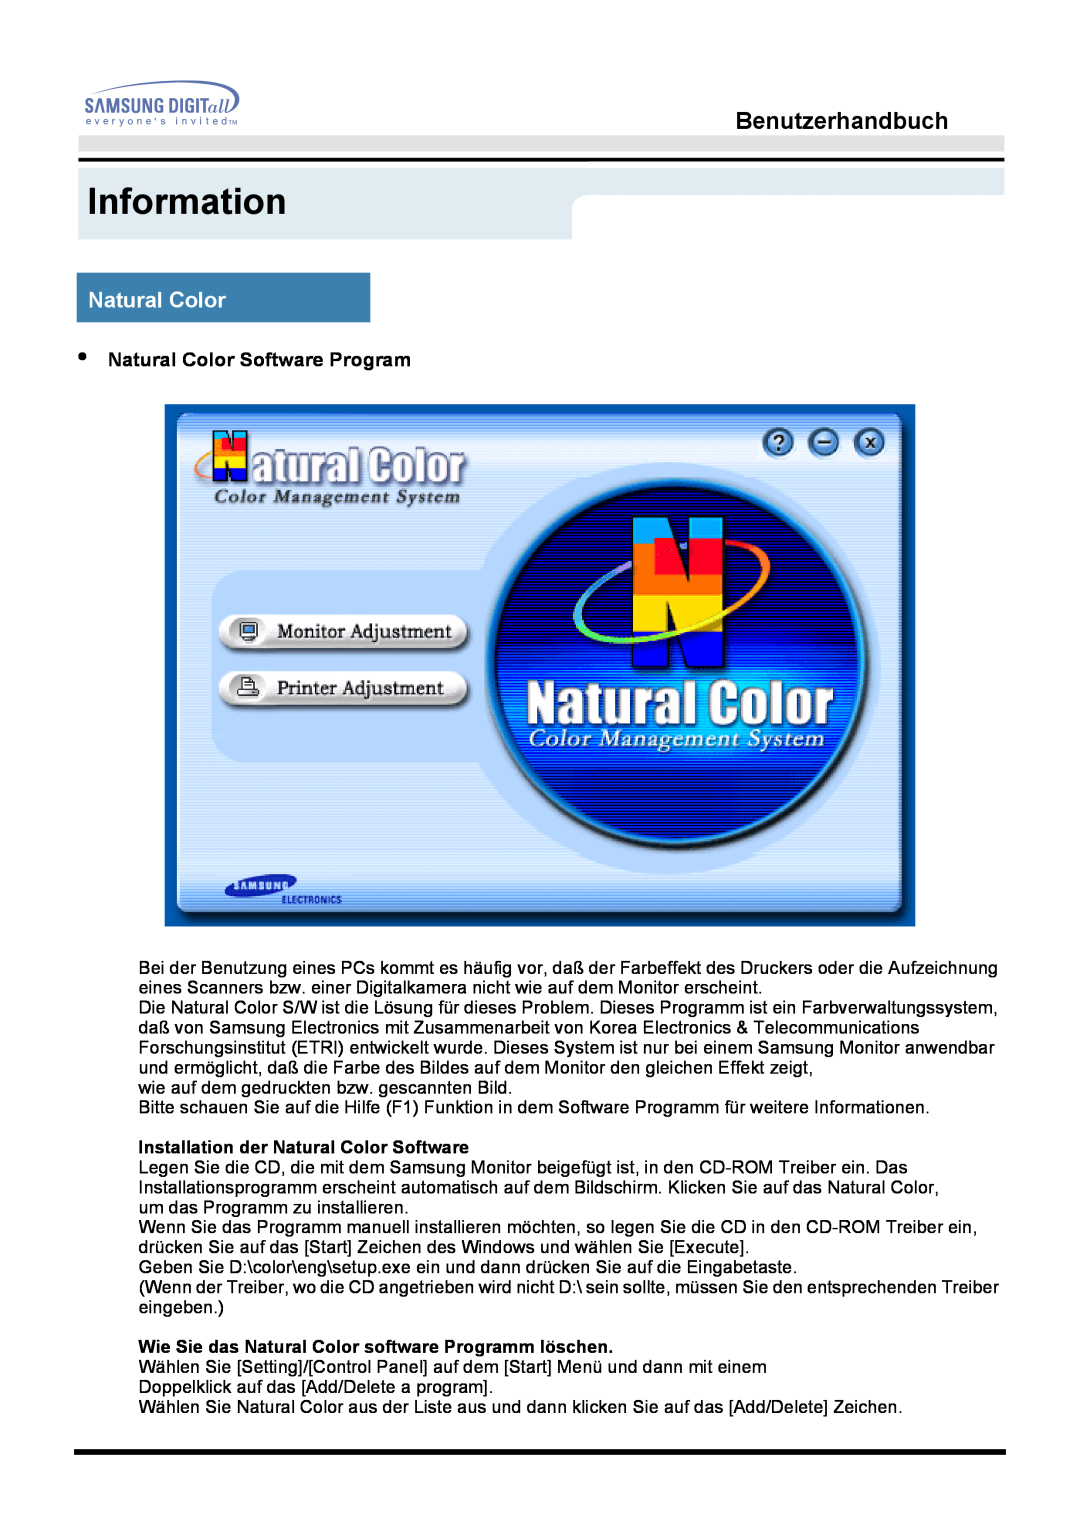 Samsung MO15ESZSZ/EDC, MO15ESDS/XEU, MO15ESDSZ/XTP manual Information, Benutzerhandbuch, Natural Color Software Program 